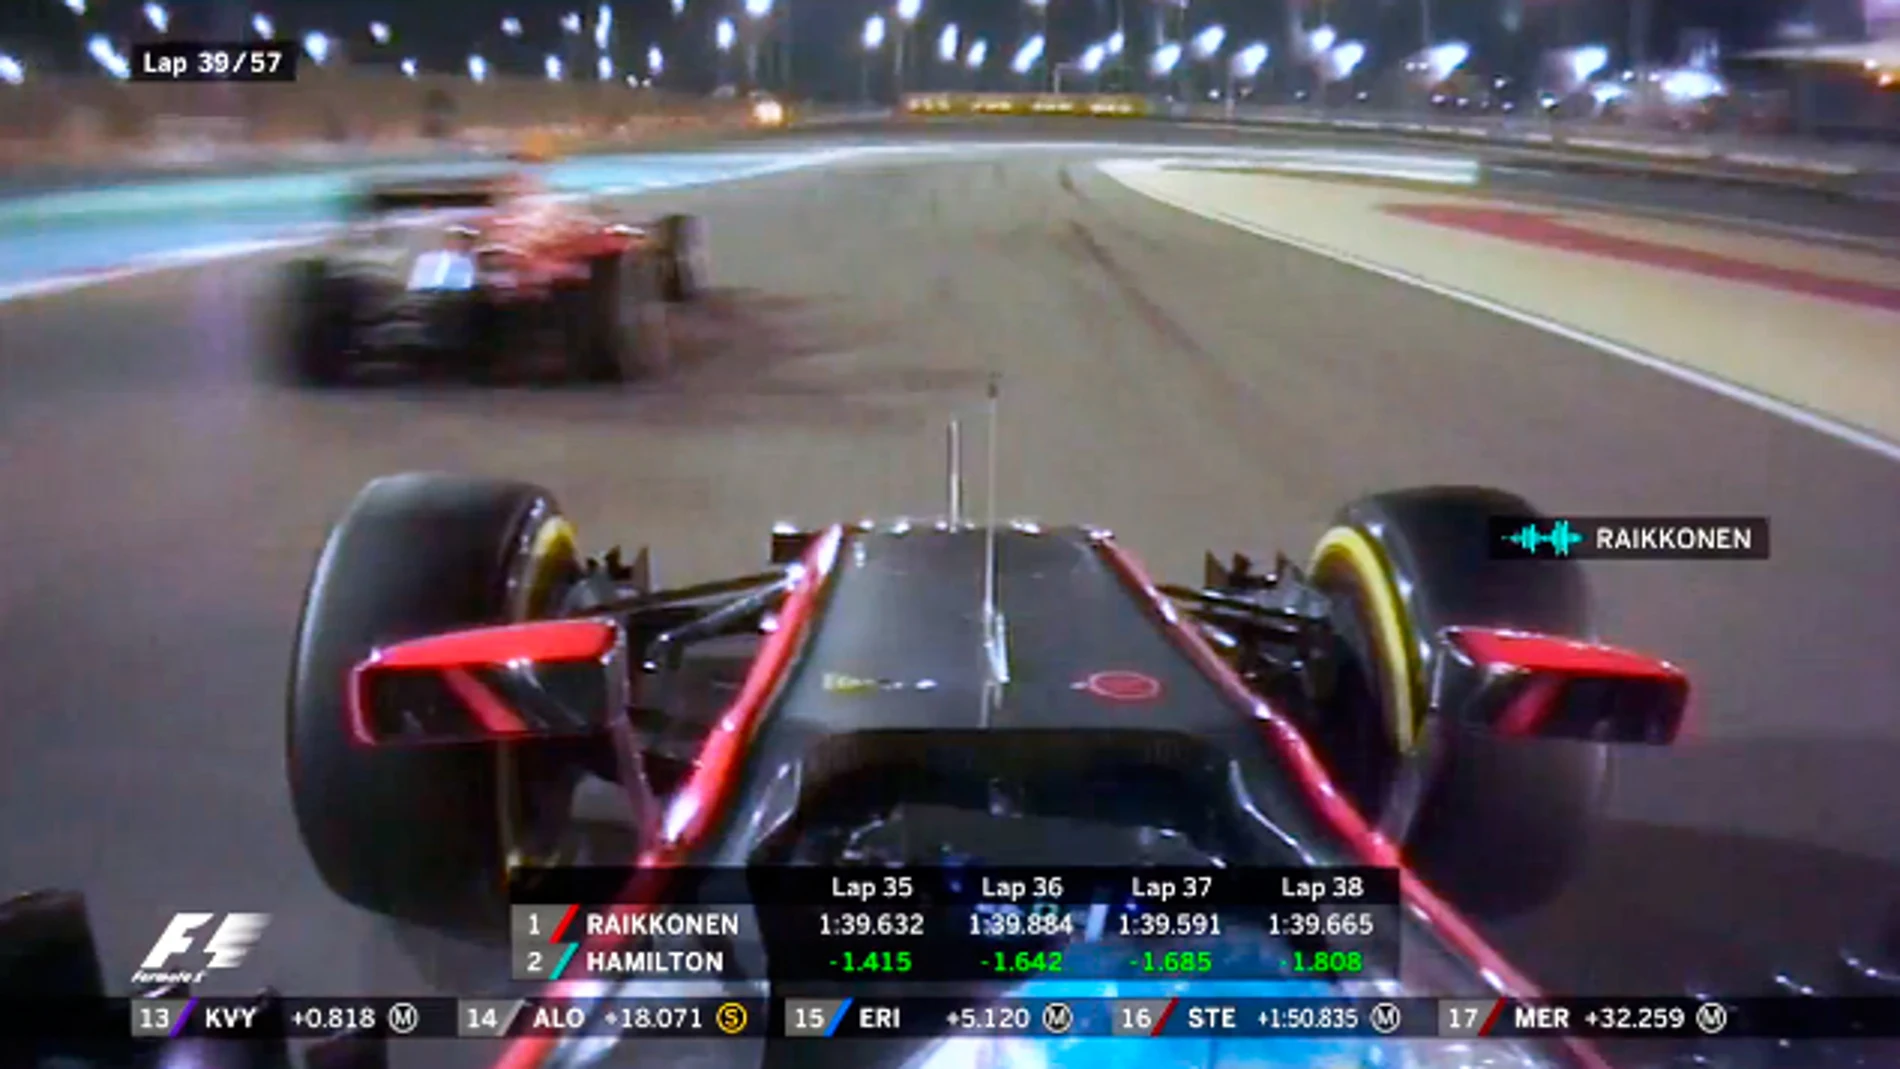 'Quitadme ese Ferrari de en medio': Alonso se toma la revancha